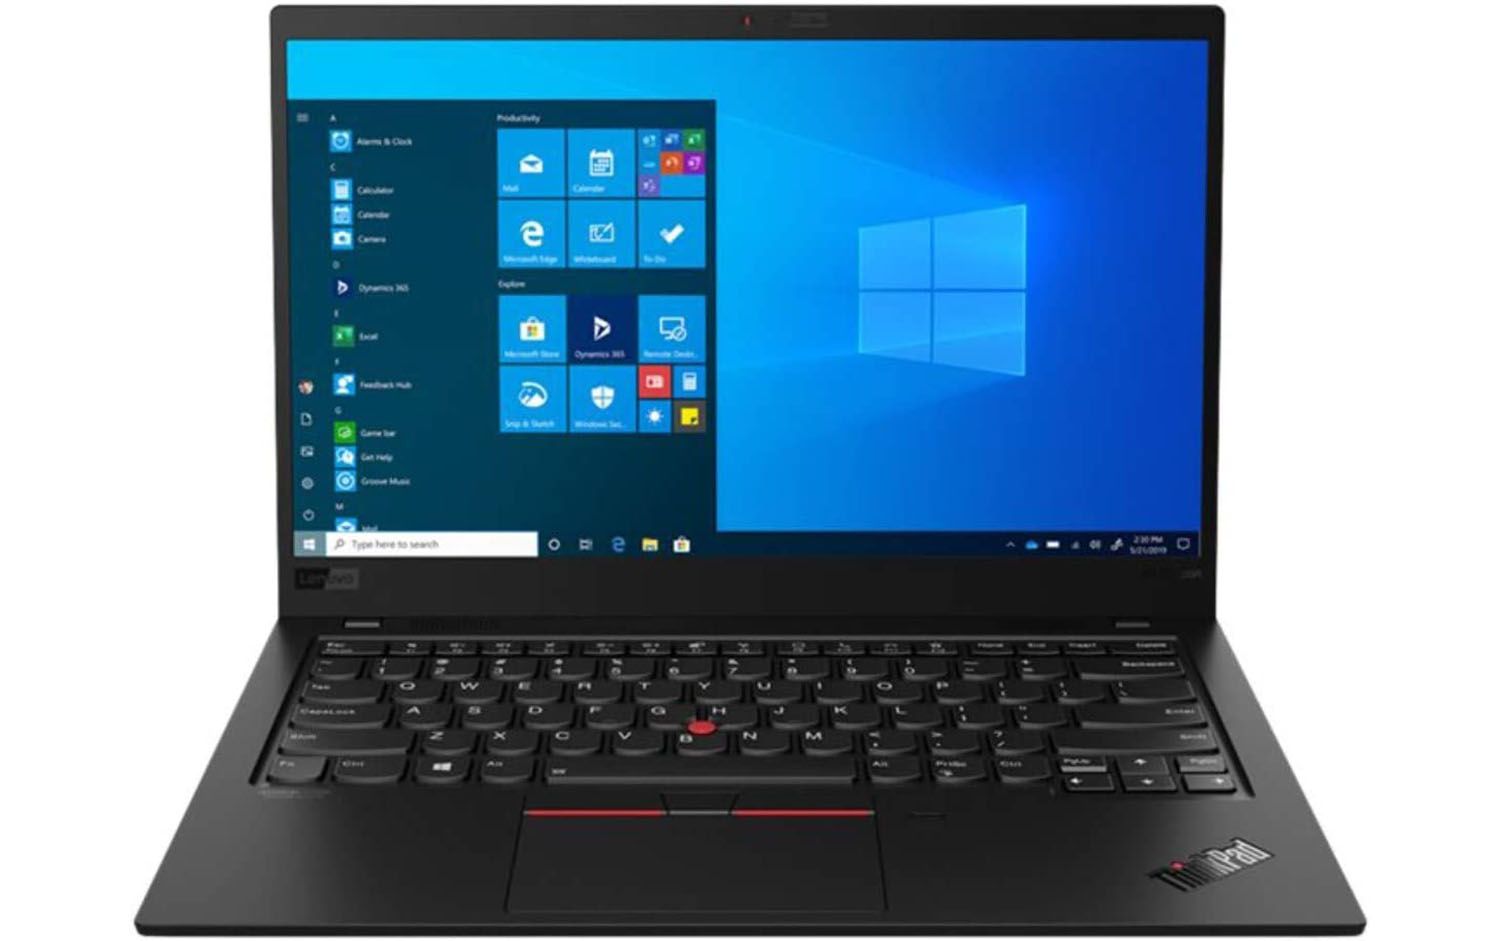 Lenovo ThinkPad X1 Carbon Gen 8 Intel Core i7 10th Gen 16GB RAM 256GB SSD Windows 10 Pro